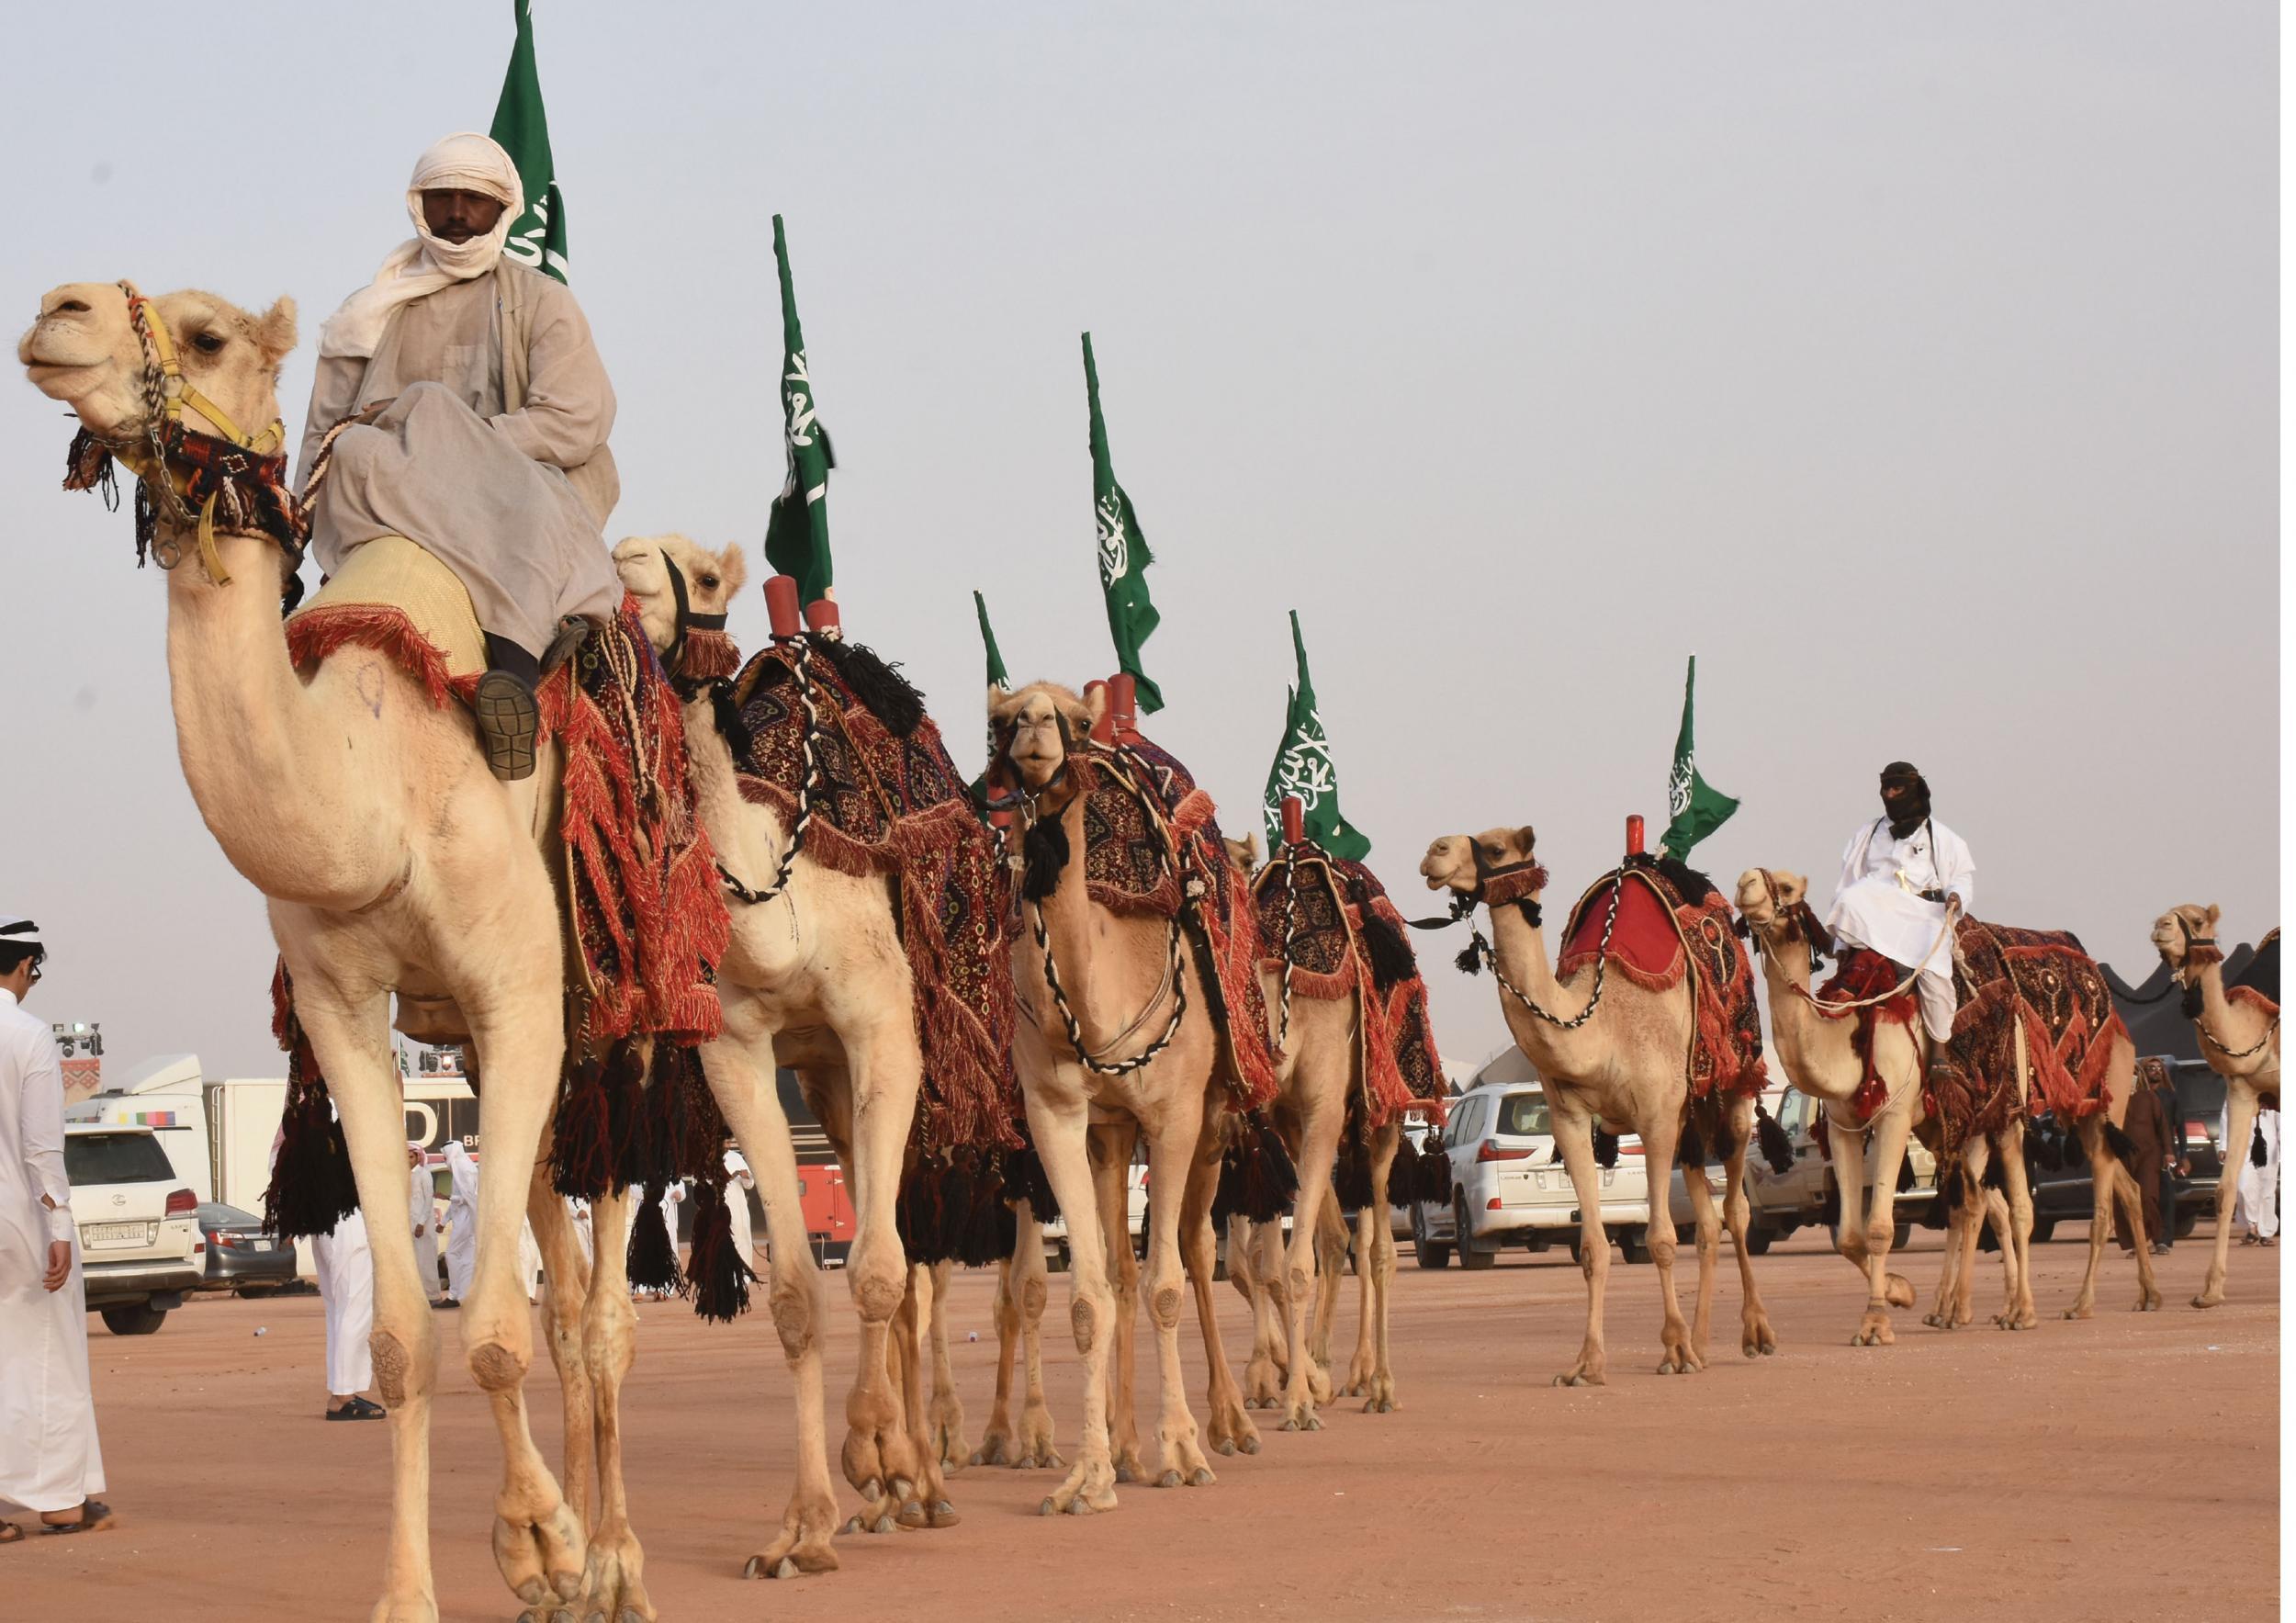 More than 30,000 camels were entered into the festival near Riyadh (King Abdul Aziz Camel Festival )